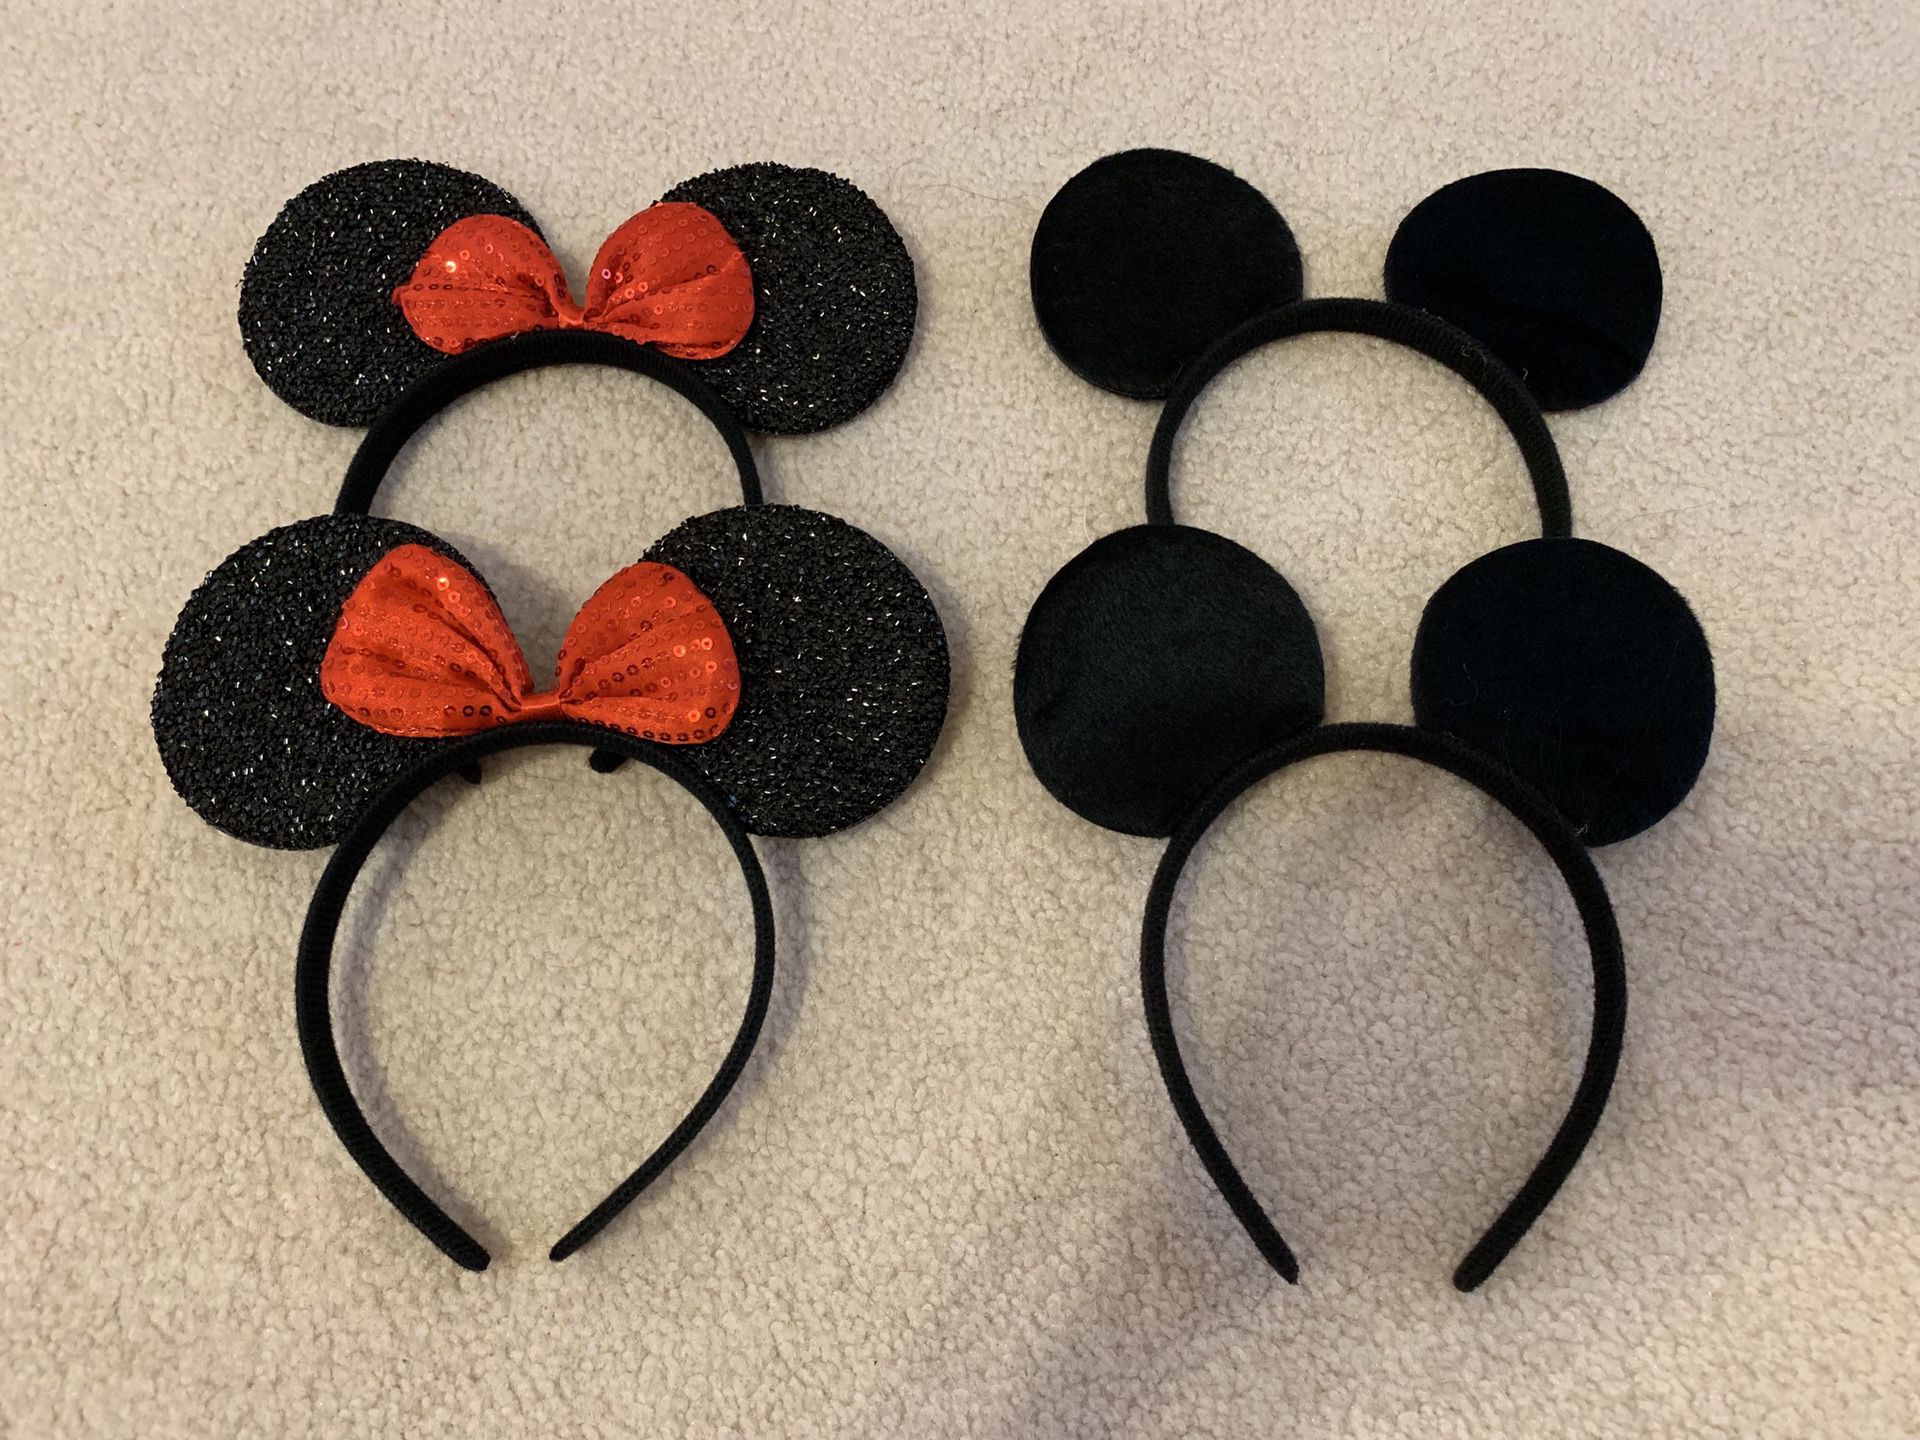 Minnie and Micky mouse ears headbands- $1.5 each